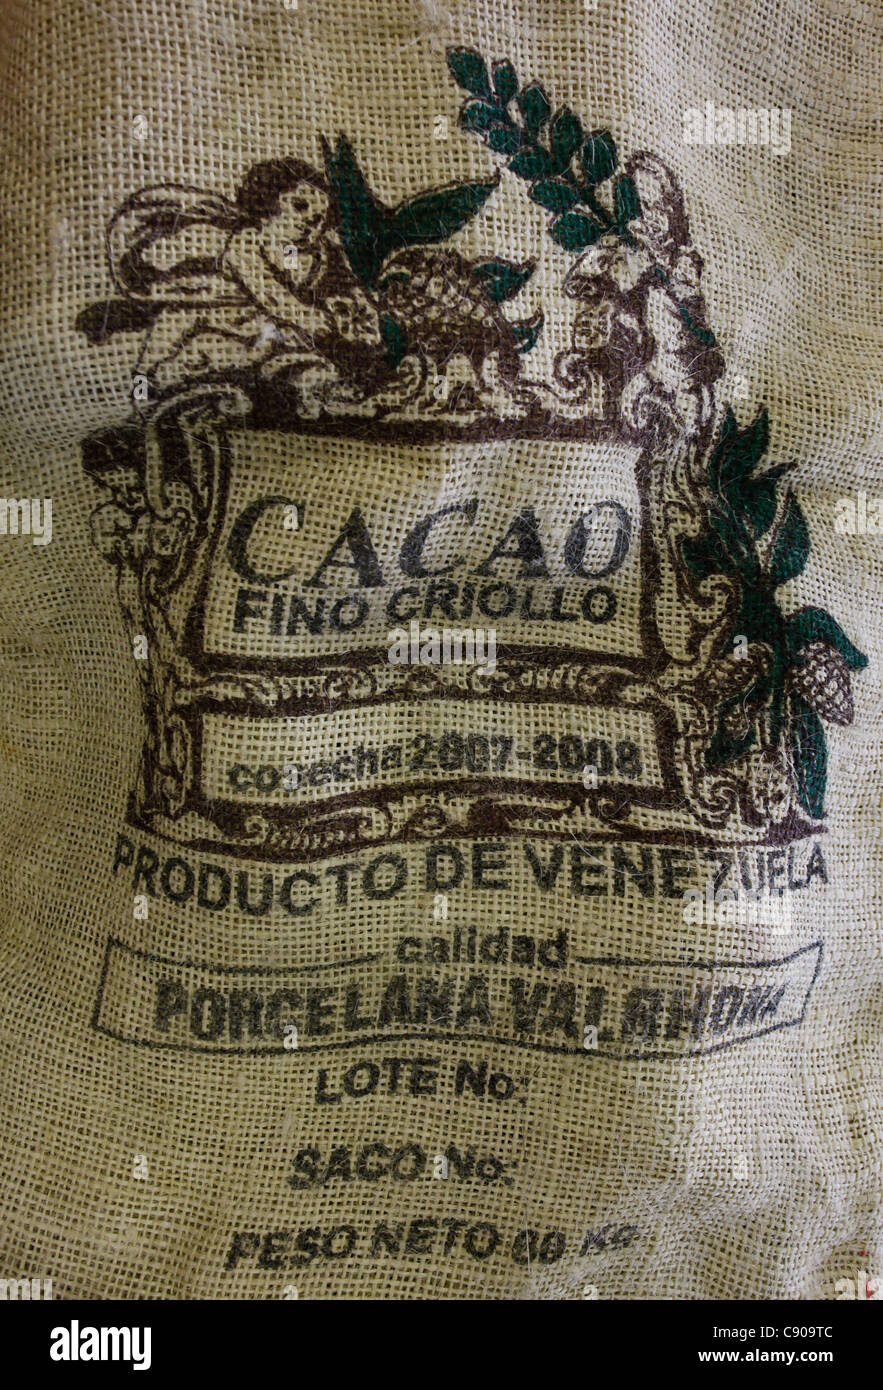 Sack of Cacao bean Stock Photo